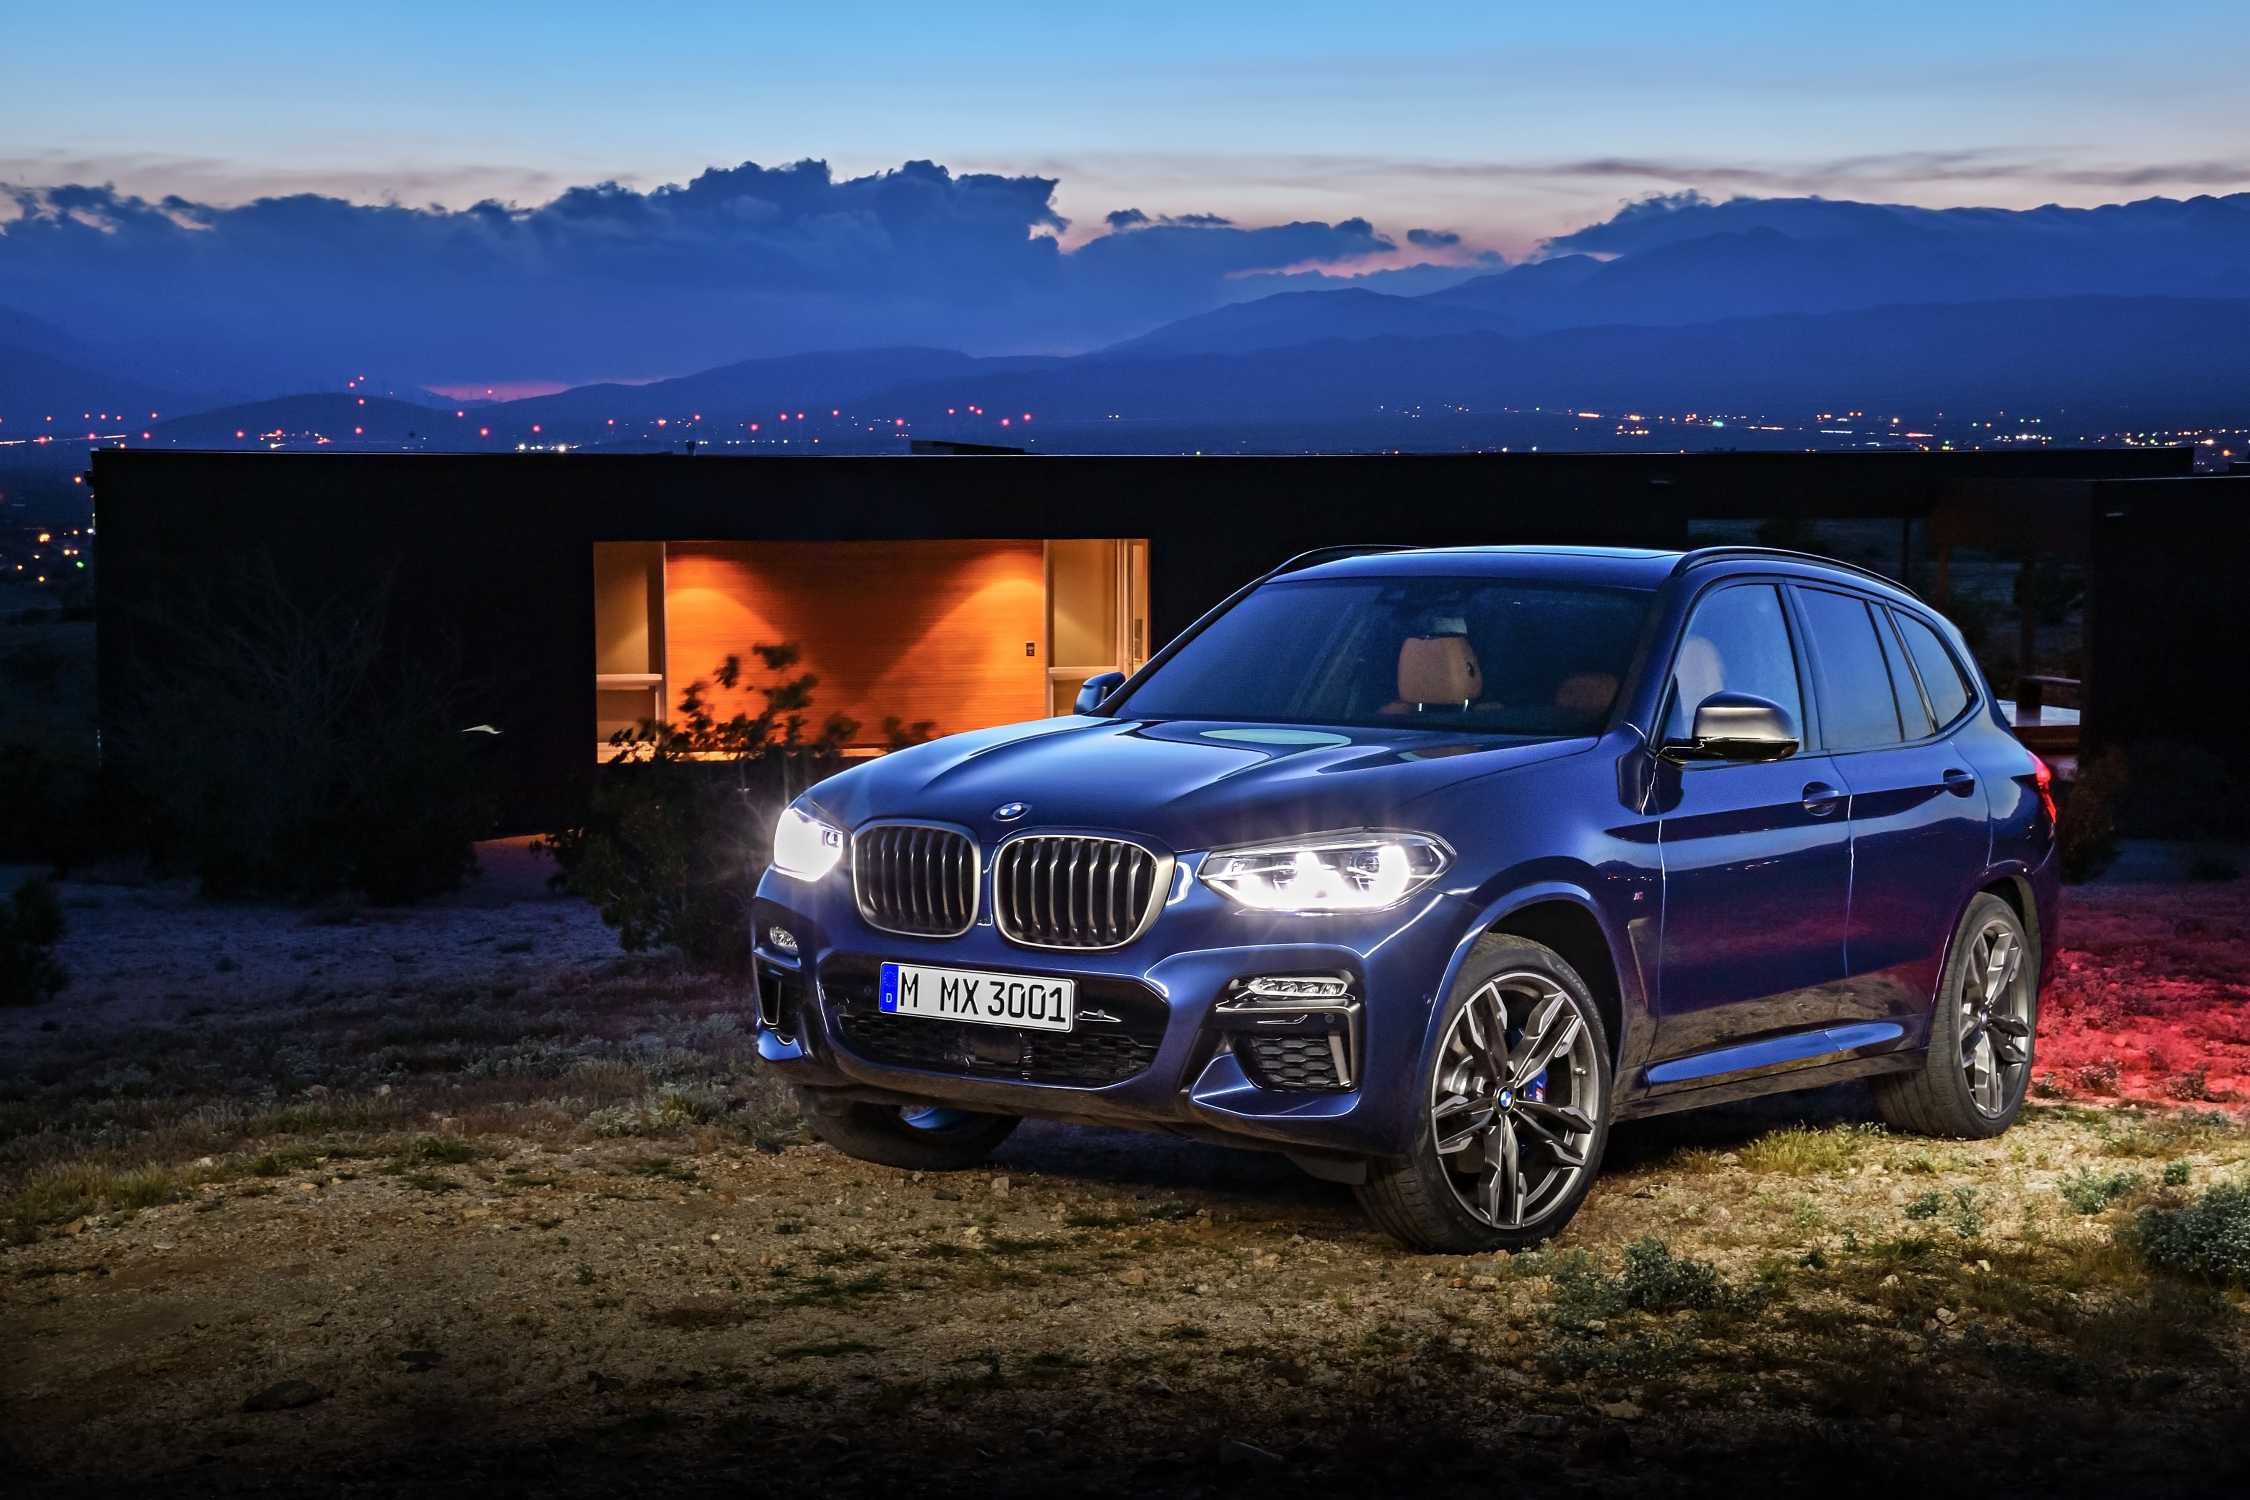 The new BMW X3 xDrive M40i (Exterior color: Phytonic Blue metallic, upholstery: Leder Vernasca Cognac) (06/2017).